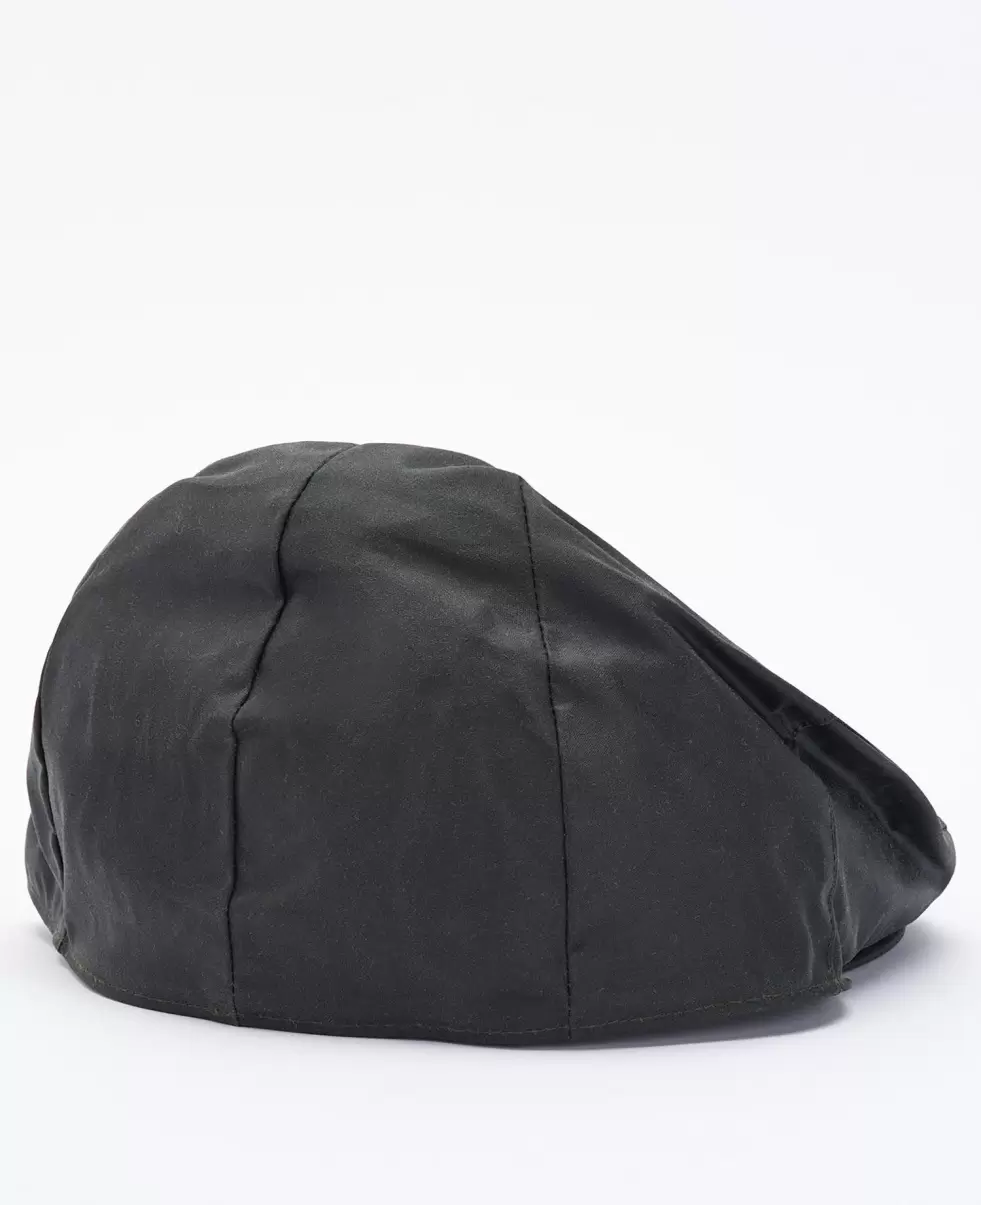 Olive Hats & Gloves Barbour Wax Flat Cap Accessories Online - 1